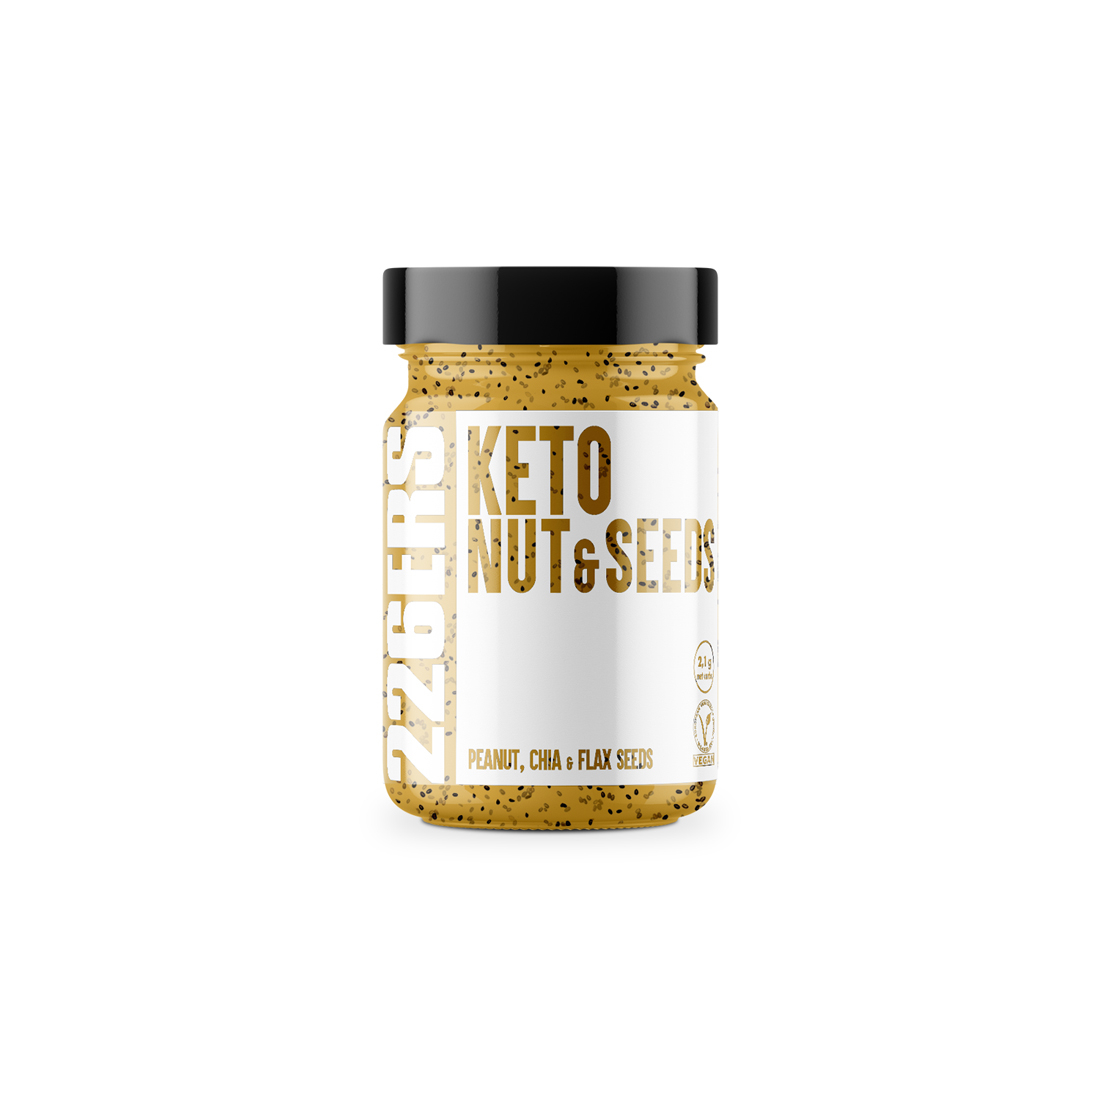 KETO BUTTER NUT & SEEDS 300g